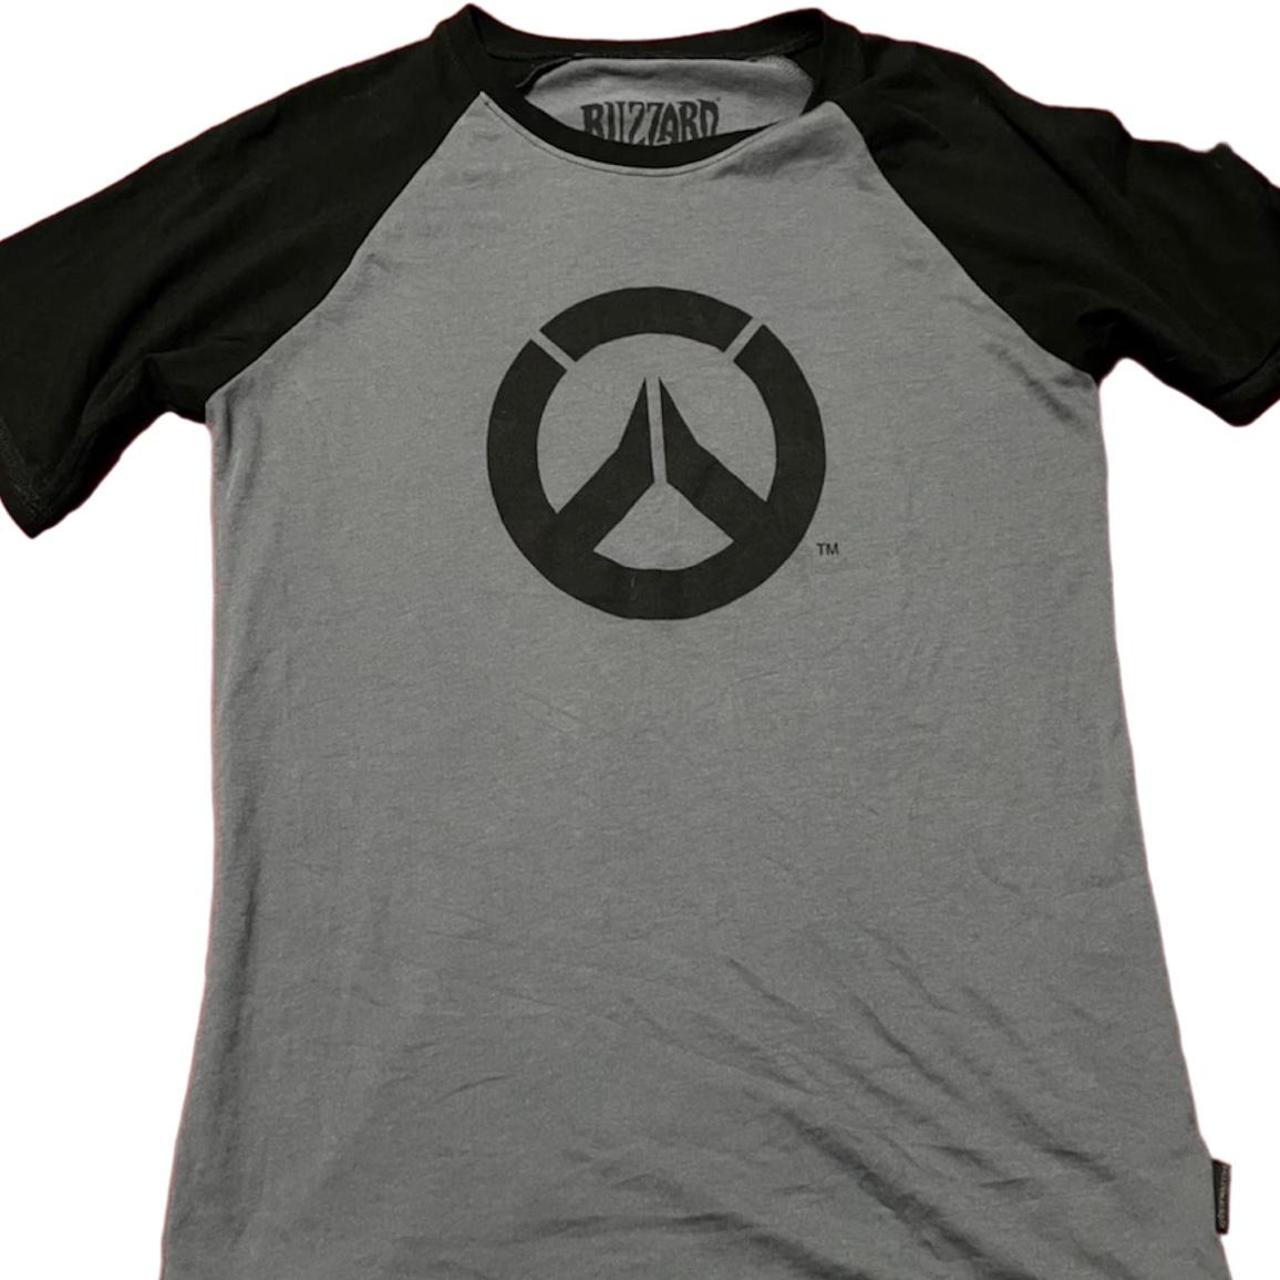 Overwatch Men's Black and Grey T-shirt